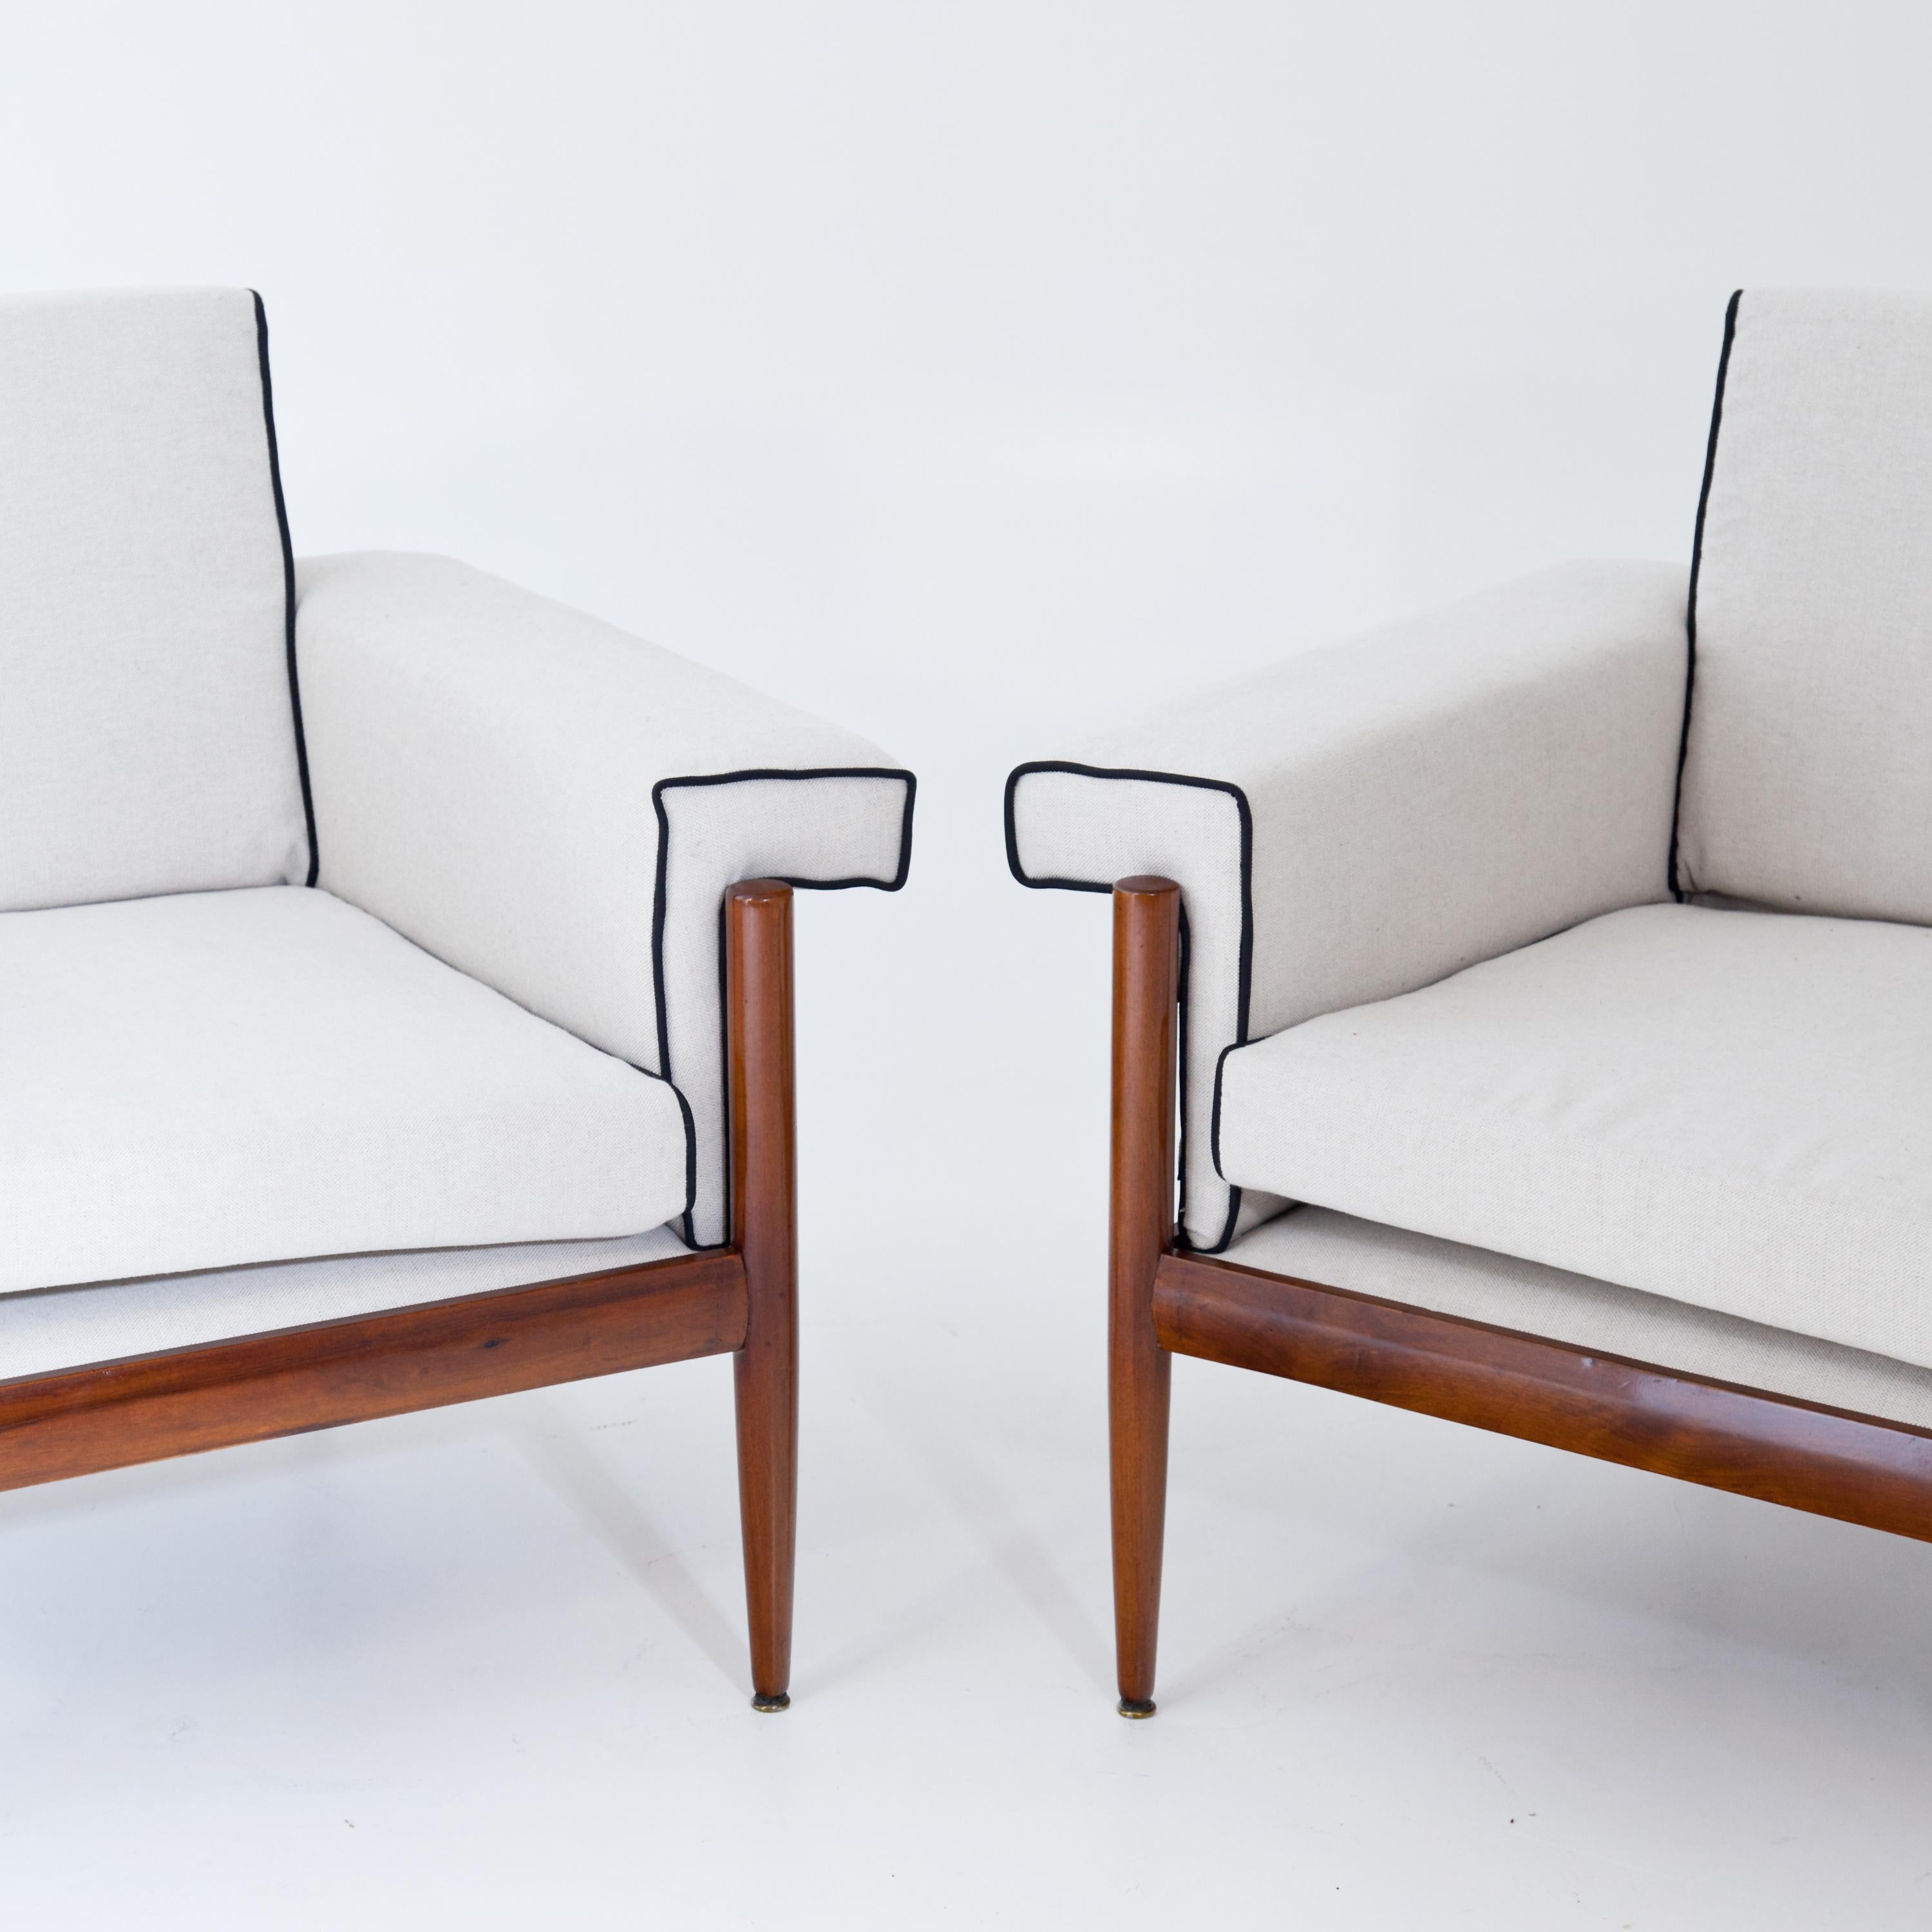 European Pair of Italian Design Lounge Chairs, Trafilisa Isa Bergamo, Italy 1950s For Sale